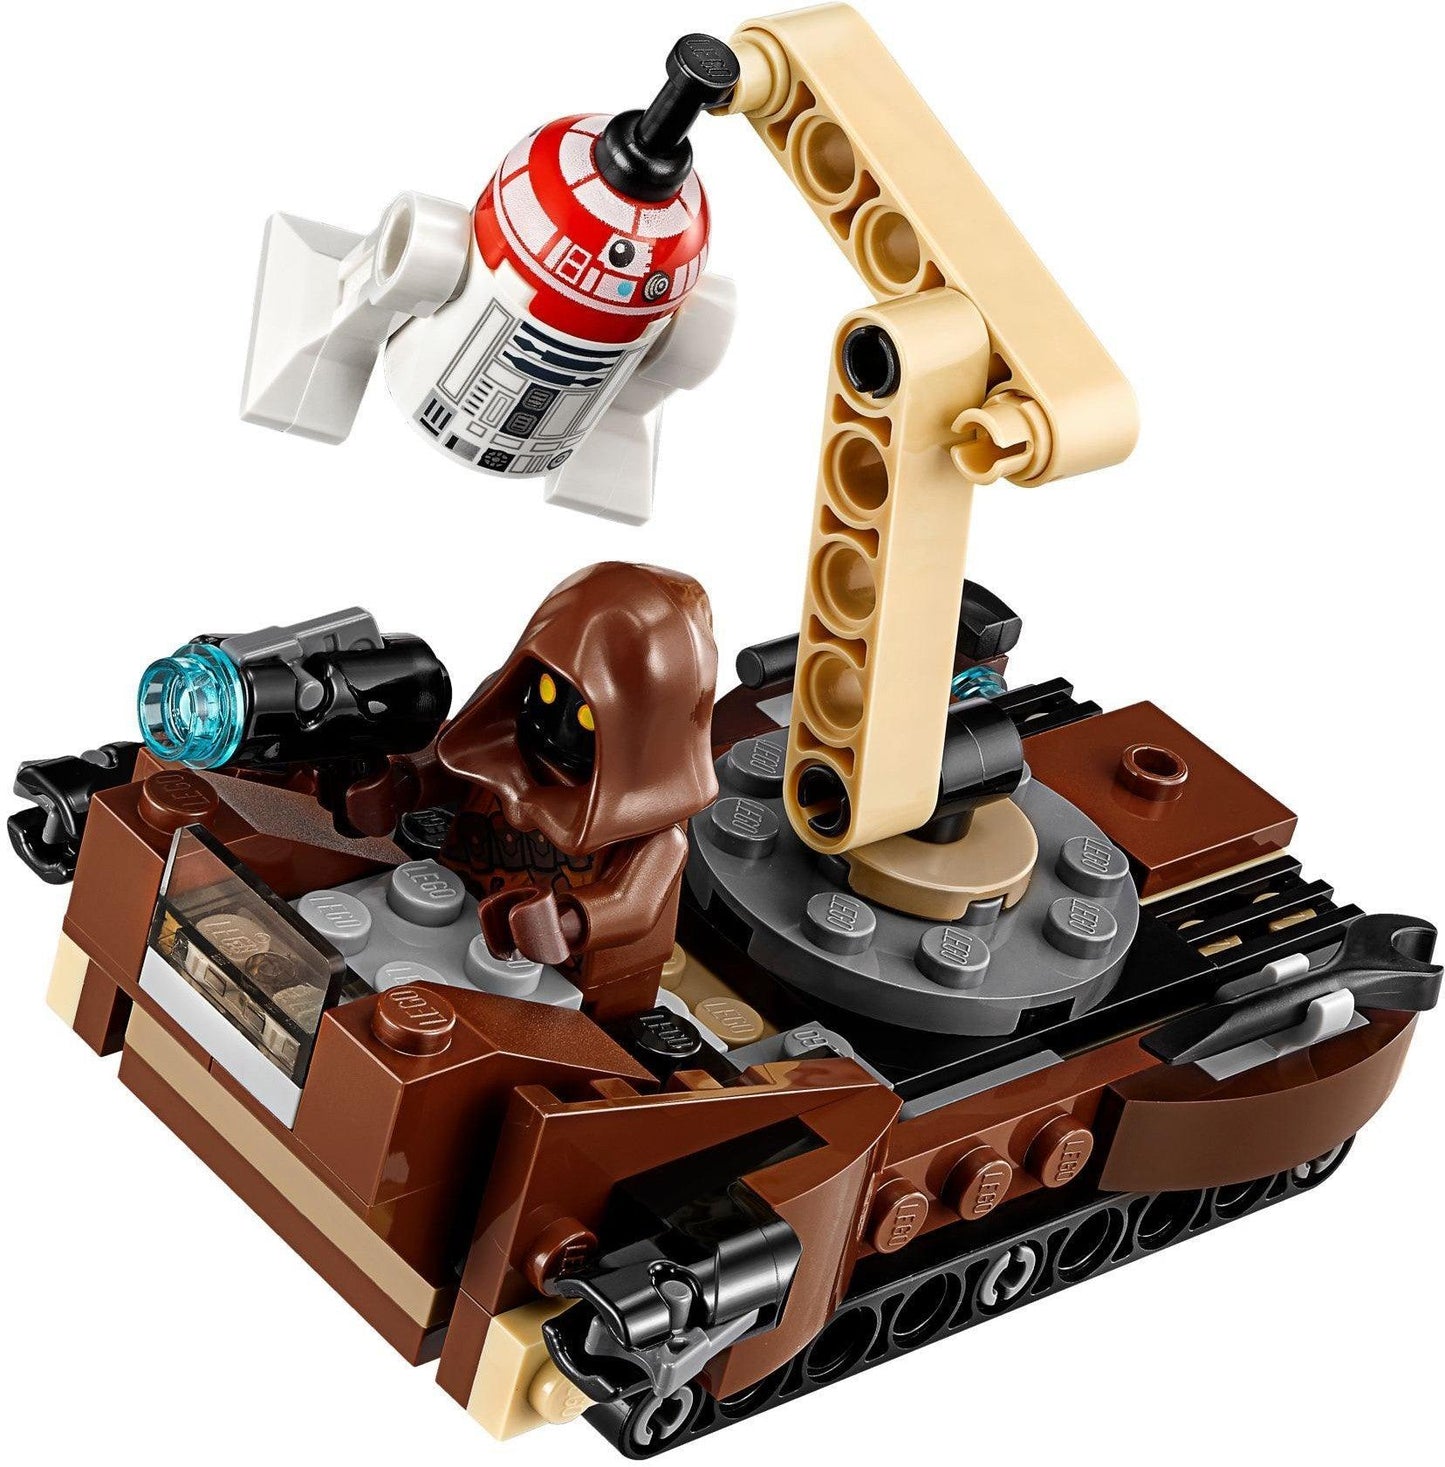 LEGO Tatooine Battle Pack 75198 StarWars | 2TTOYS ✓ Official shop<br>